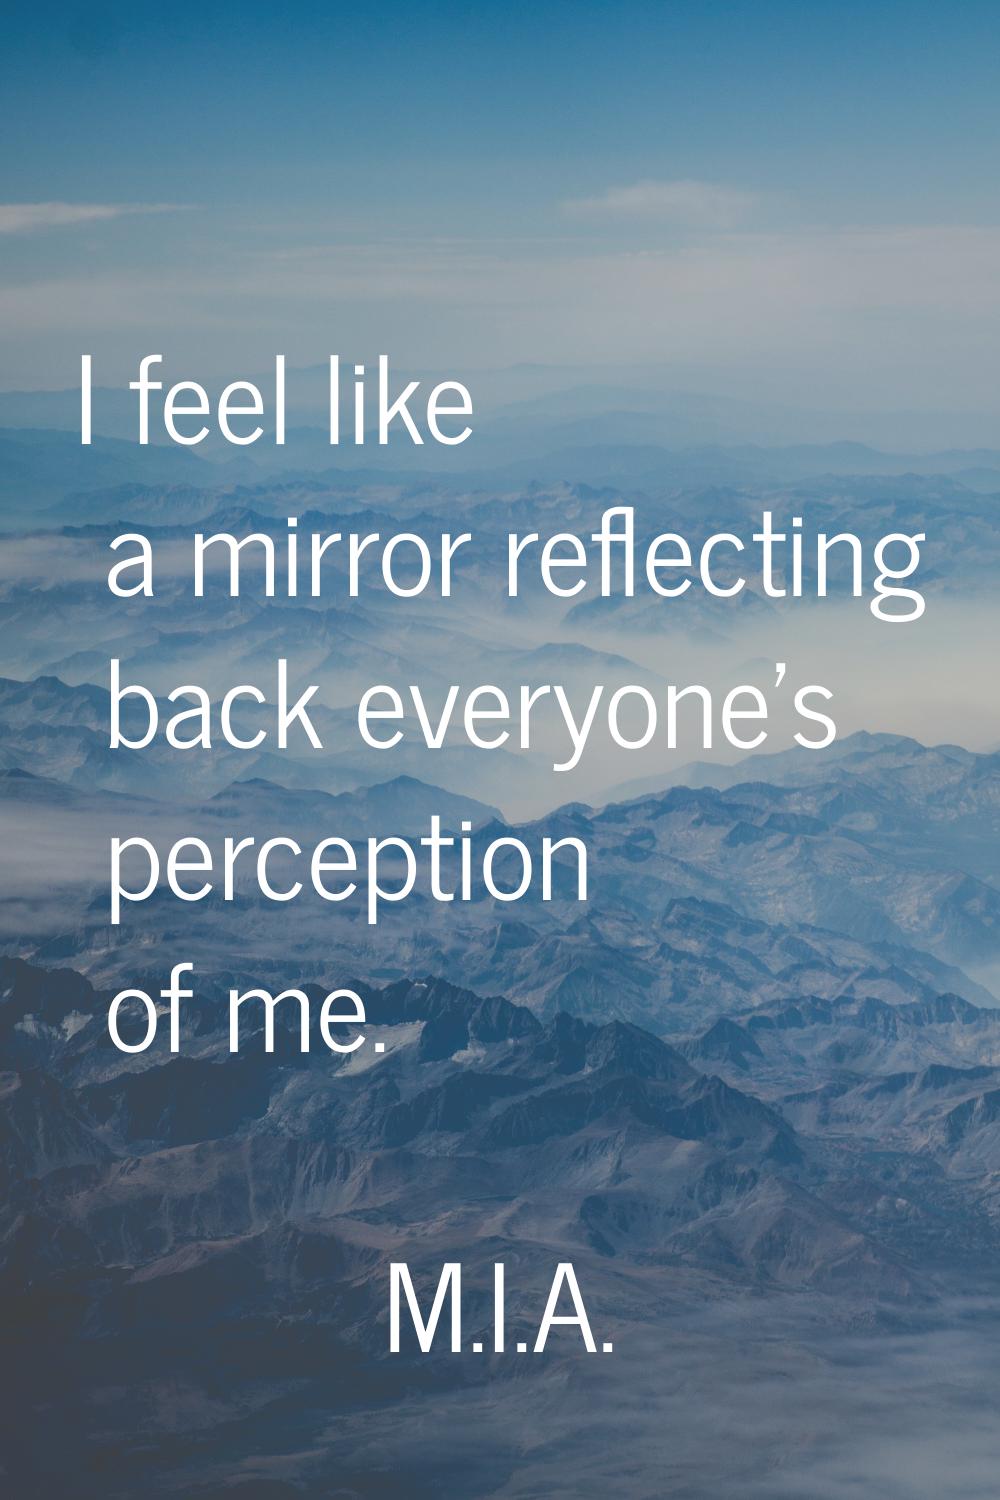 I feel like a mirror reflecting back everyone's perception of me.